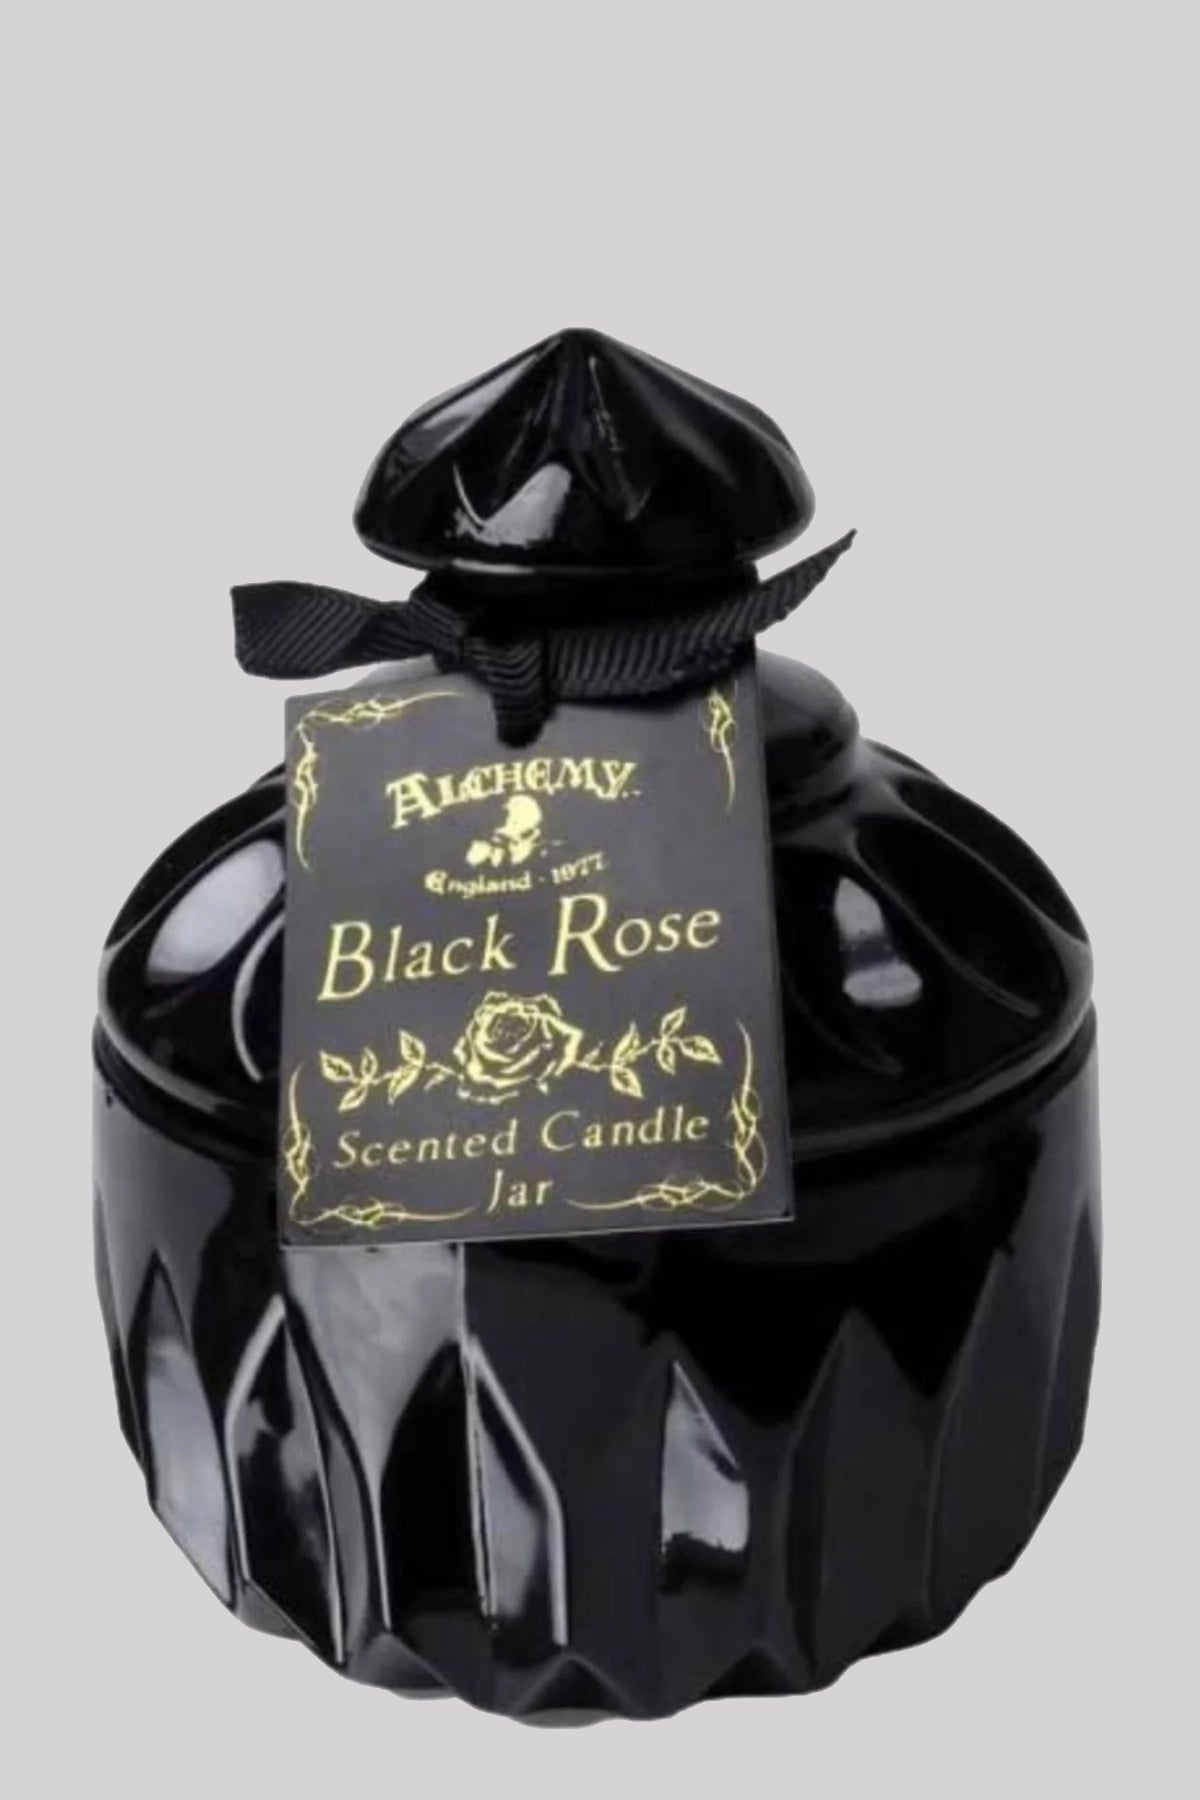 Alchemy England Vintage Scented Black Rose Round Candle Jar